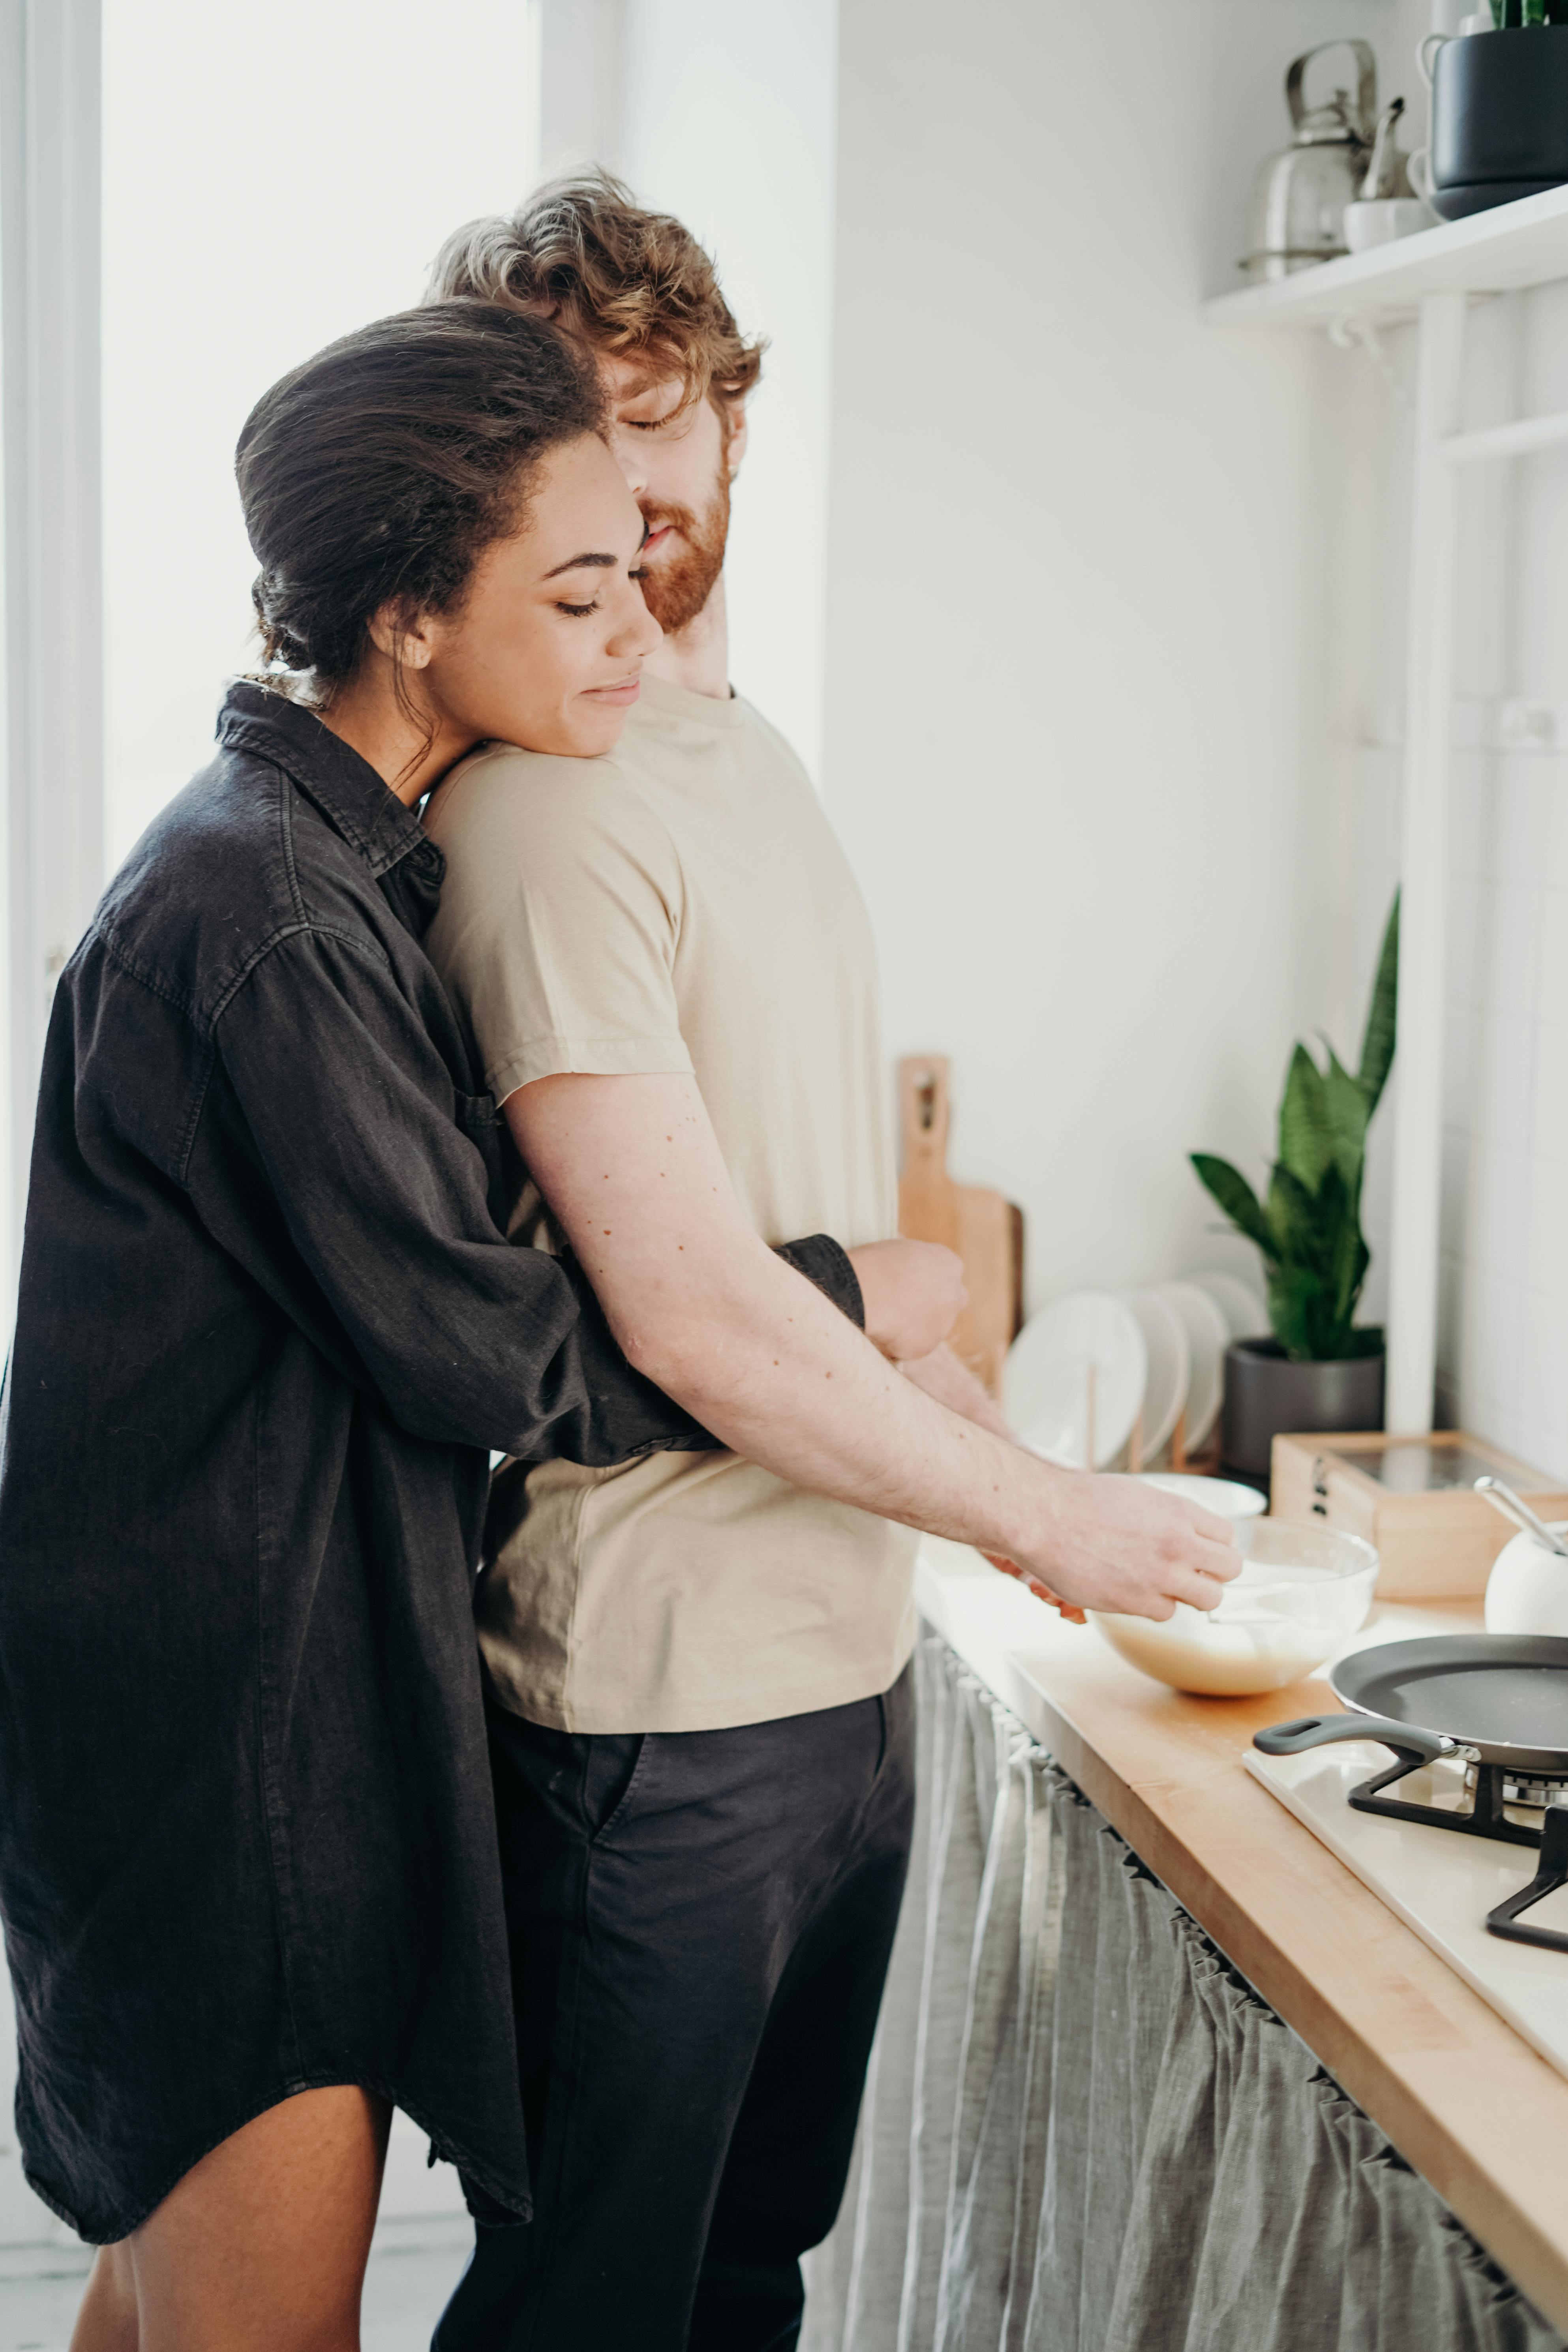 A woman hugging her man while he prepares breakfast | Source: Pexels